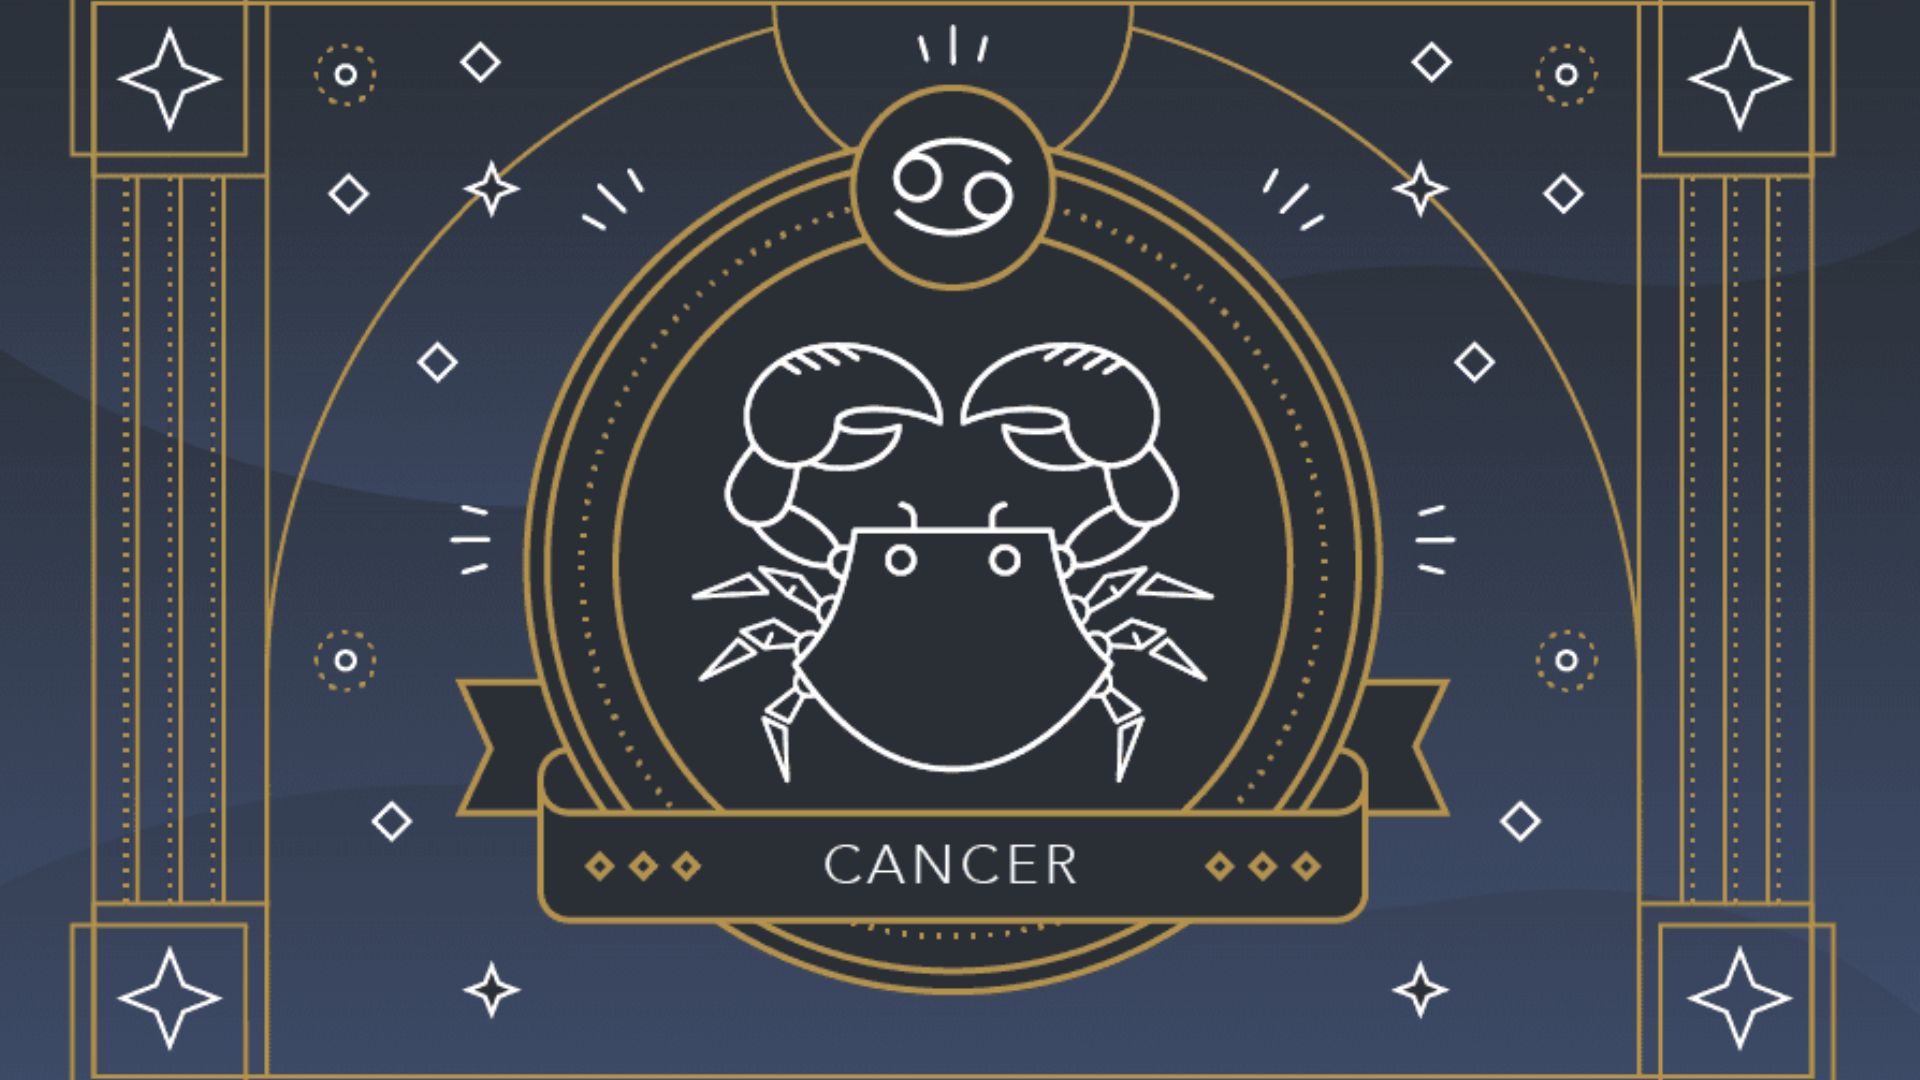 Creative Display Of Cancer